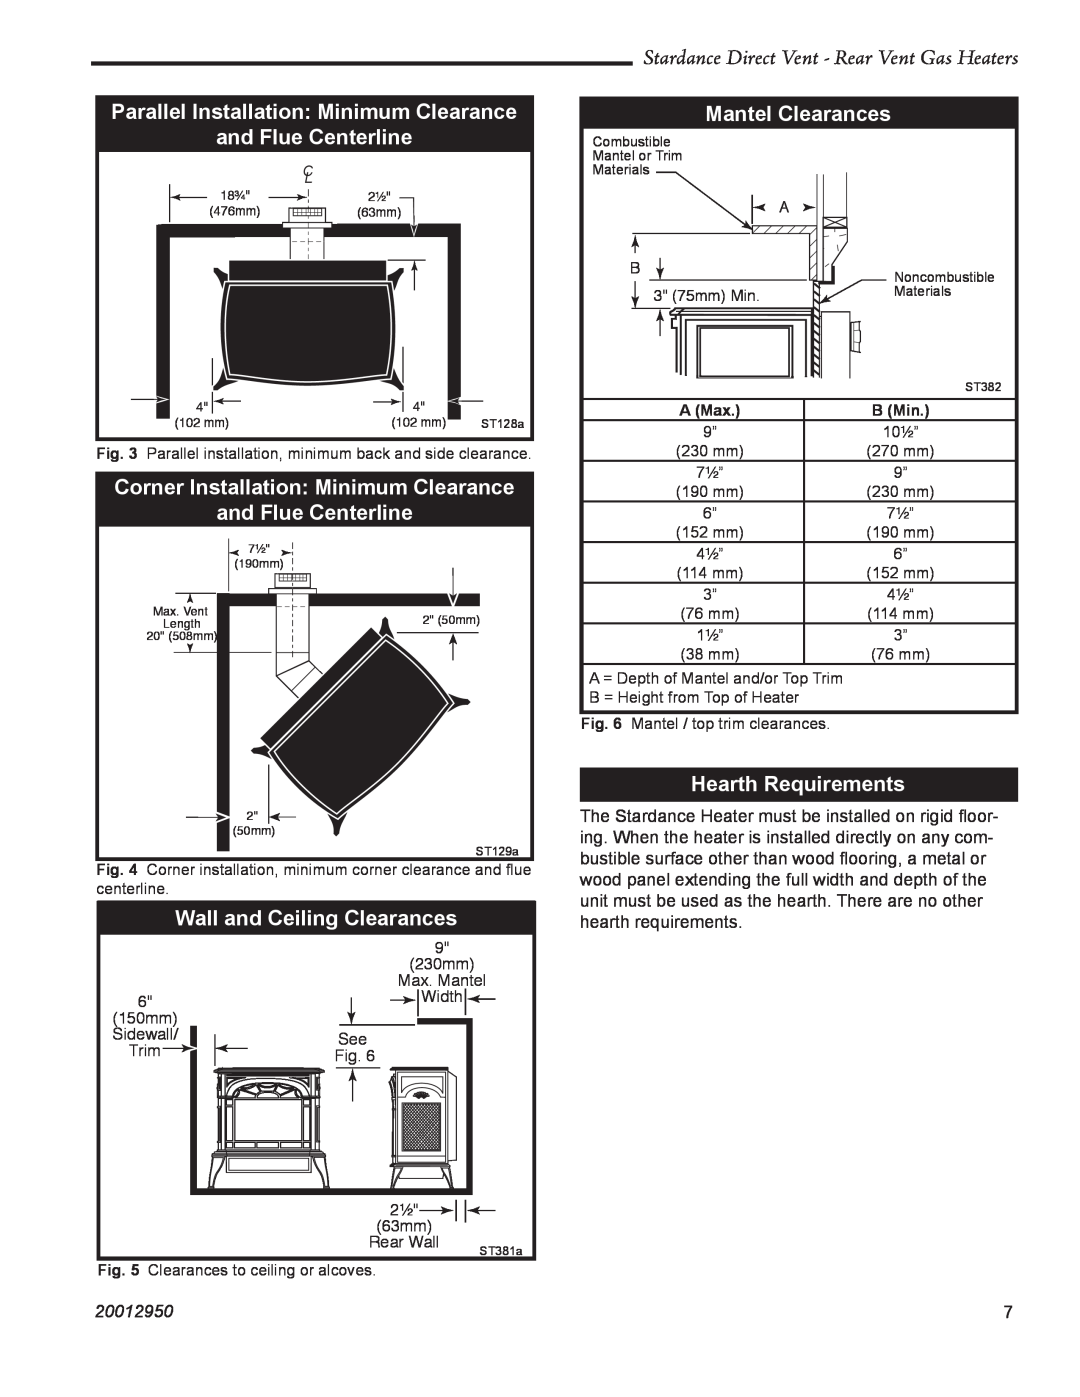 Vermont Casting SDDVRCBD manual Parallel Installation Minimum Clearance, Mantel Clearances, and Flue Centerline, 20012950 